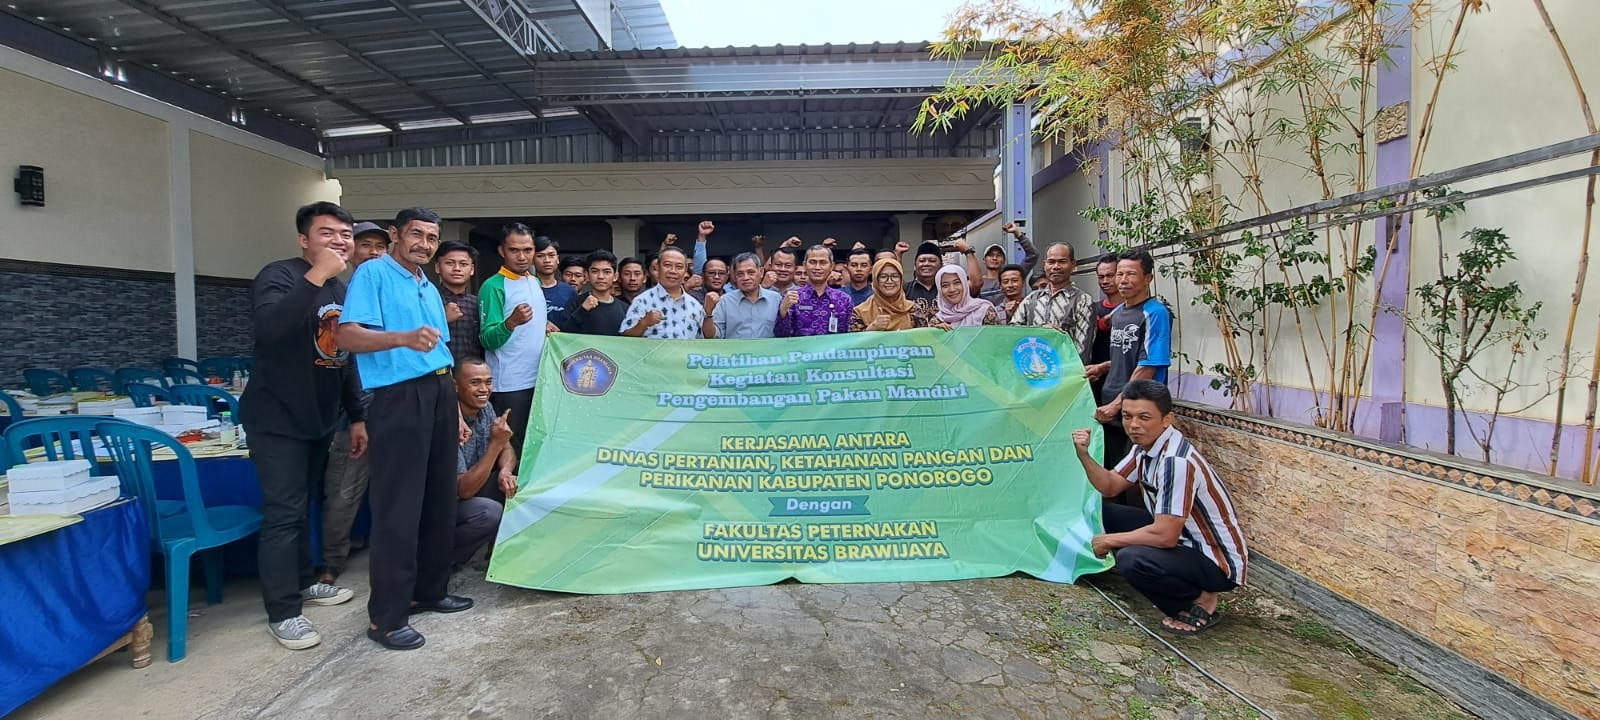 Bersama Dinas Pertanian, Ketahanan Pangan, dan Perikanan Kabupaten Ponorogo, Dosen Fapet Berikan Pendampingan Pengembangan Pakan Mandiri